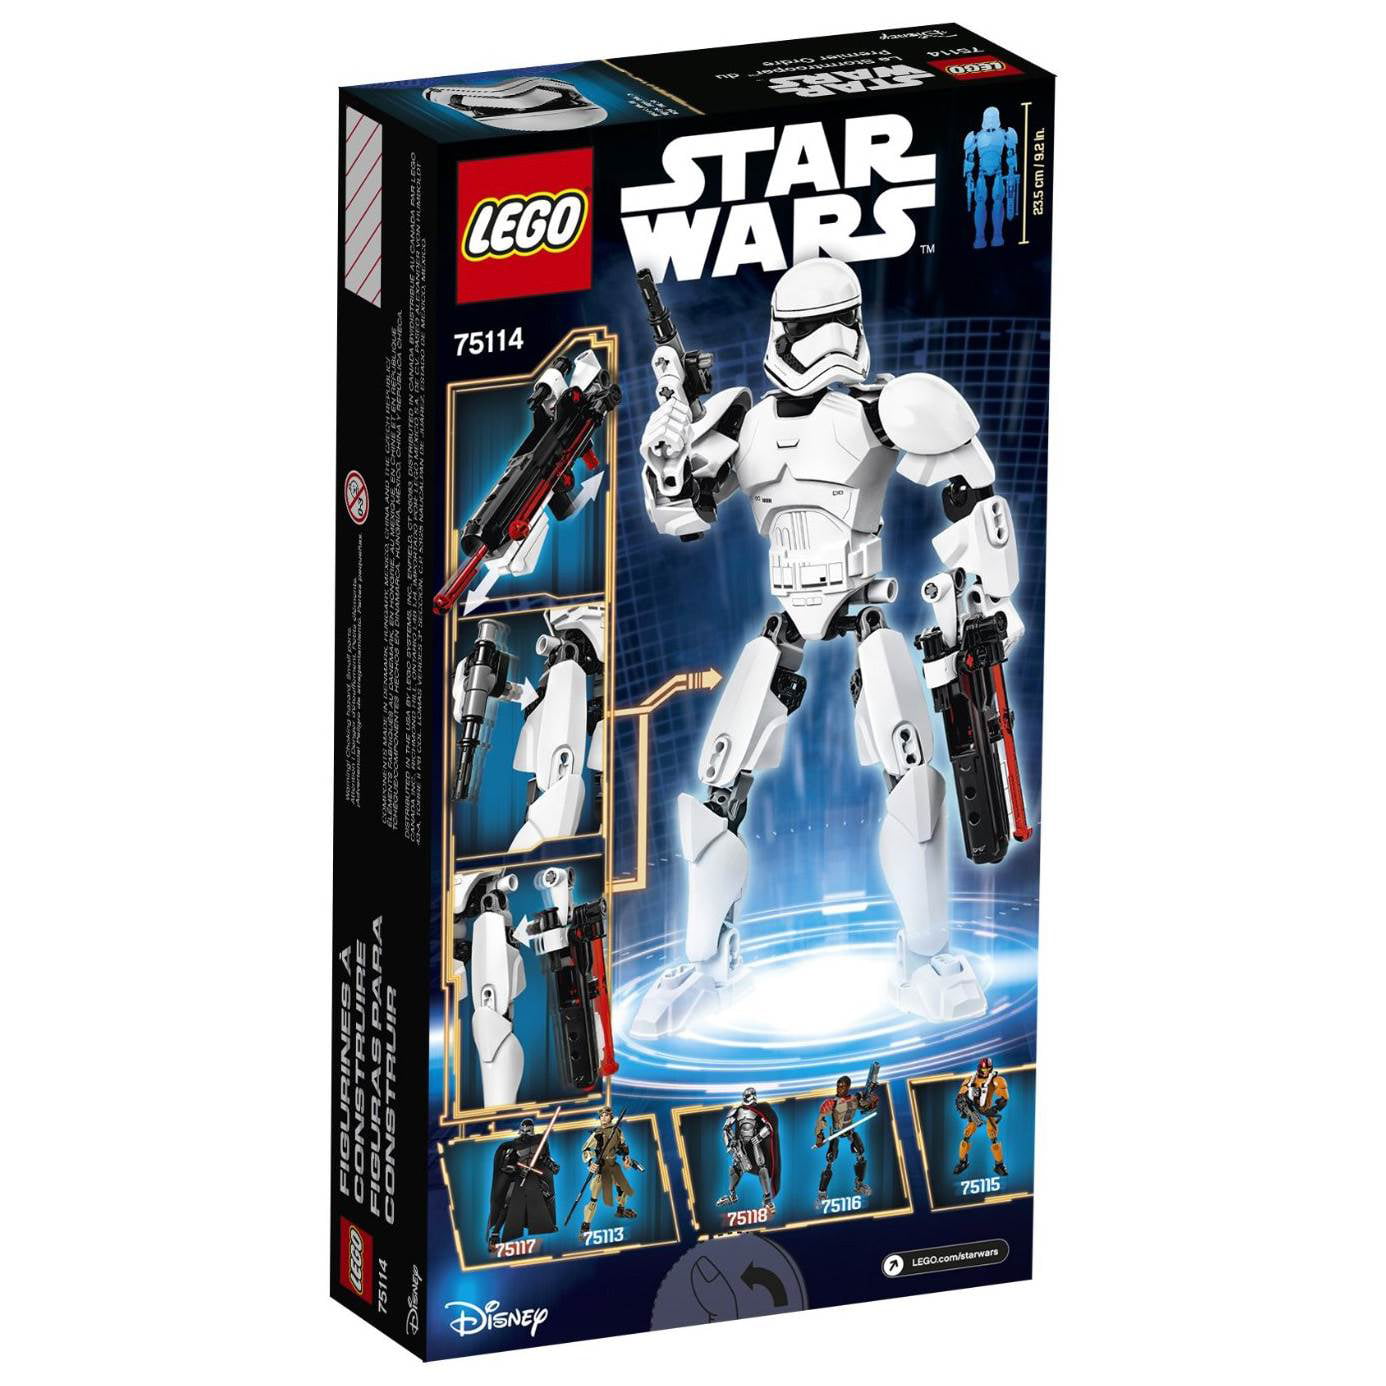 Star Wars Order Stormtrooper 75114 Walmart.com